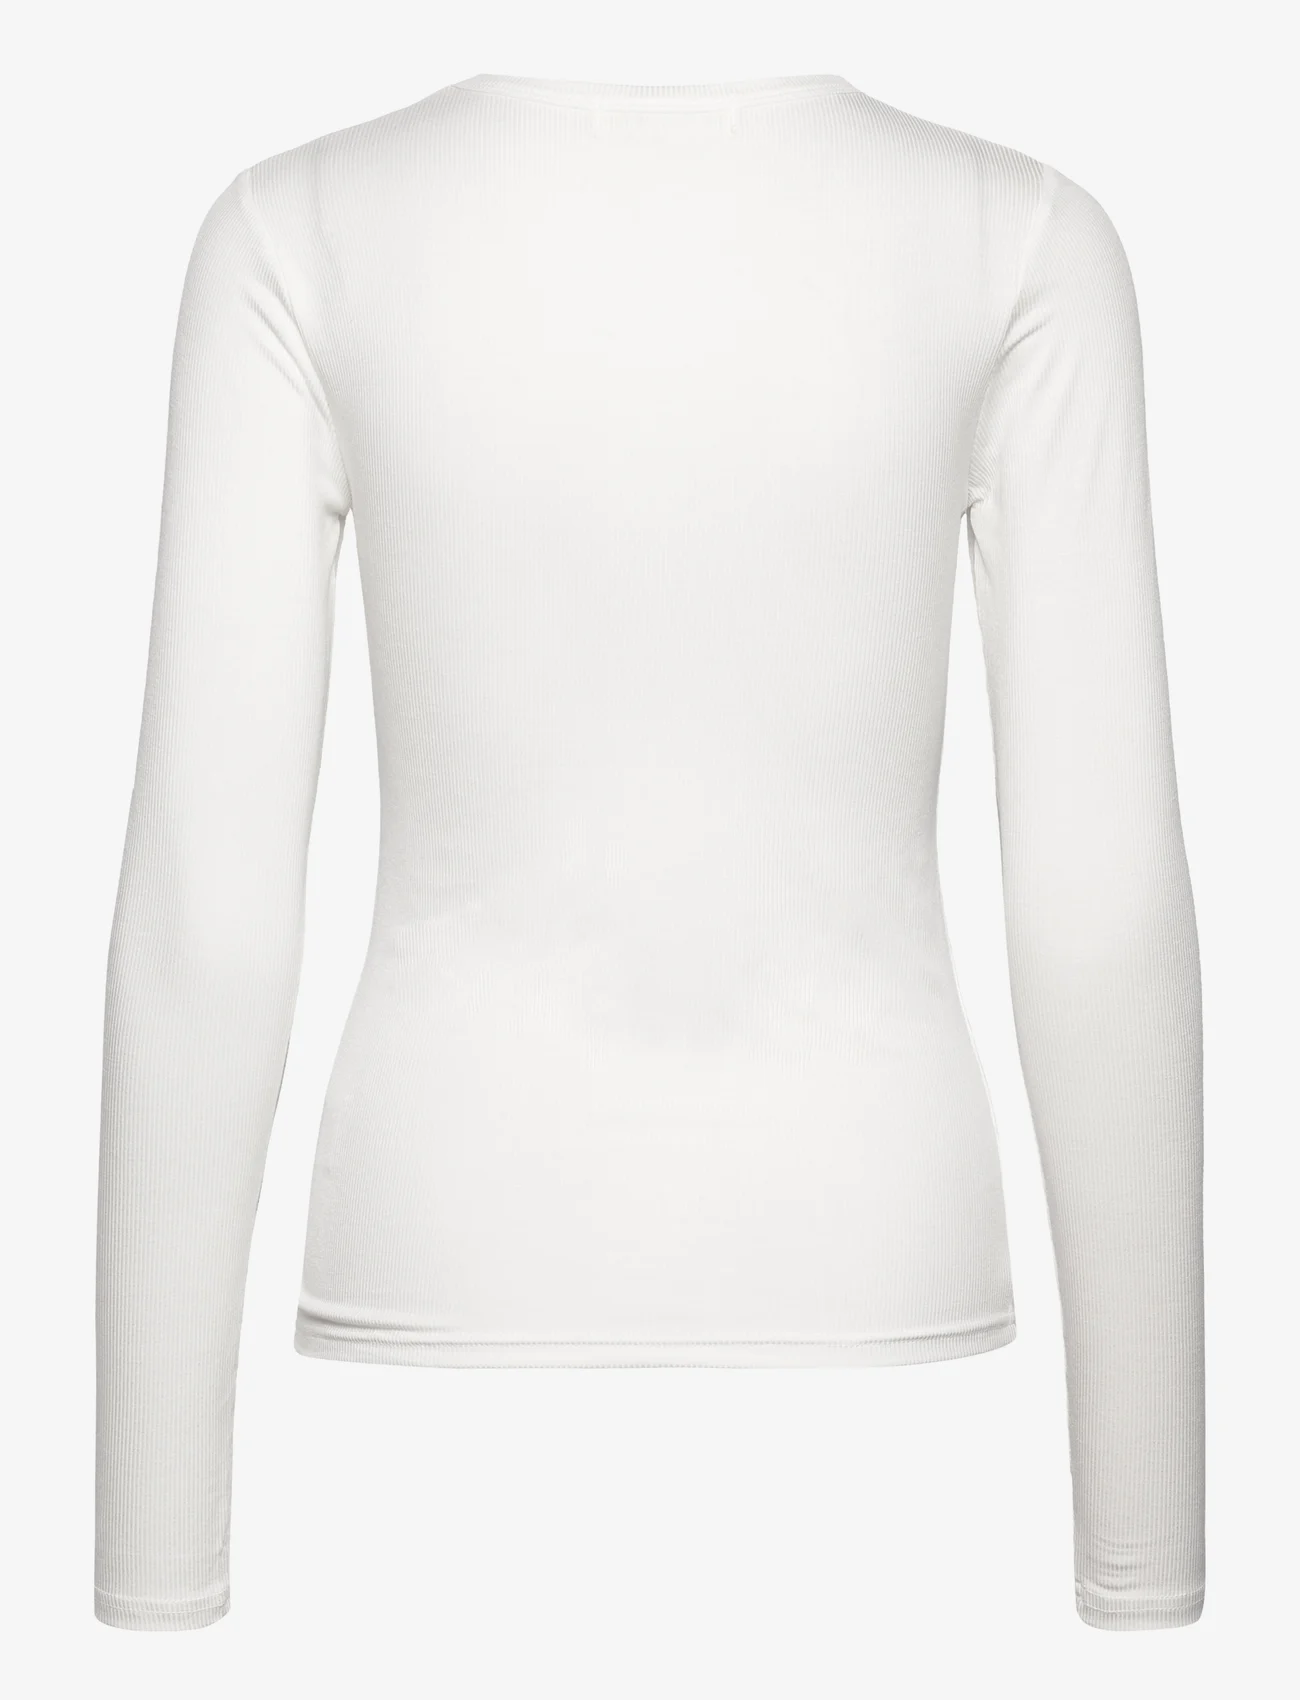 Sofie Schnoor - T-shirt long sleeve - t-shirts met lange mouwen - white - 1